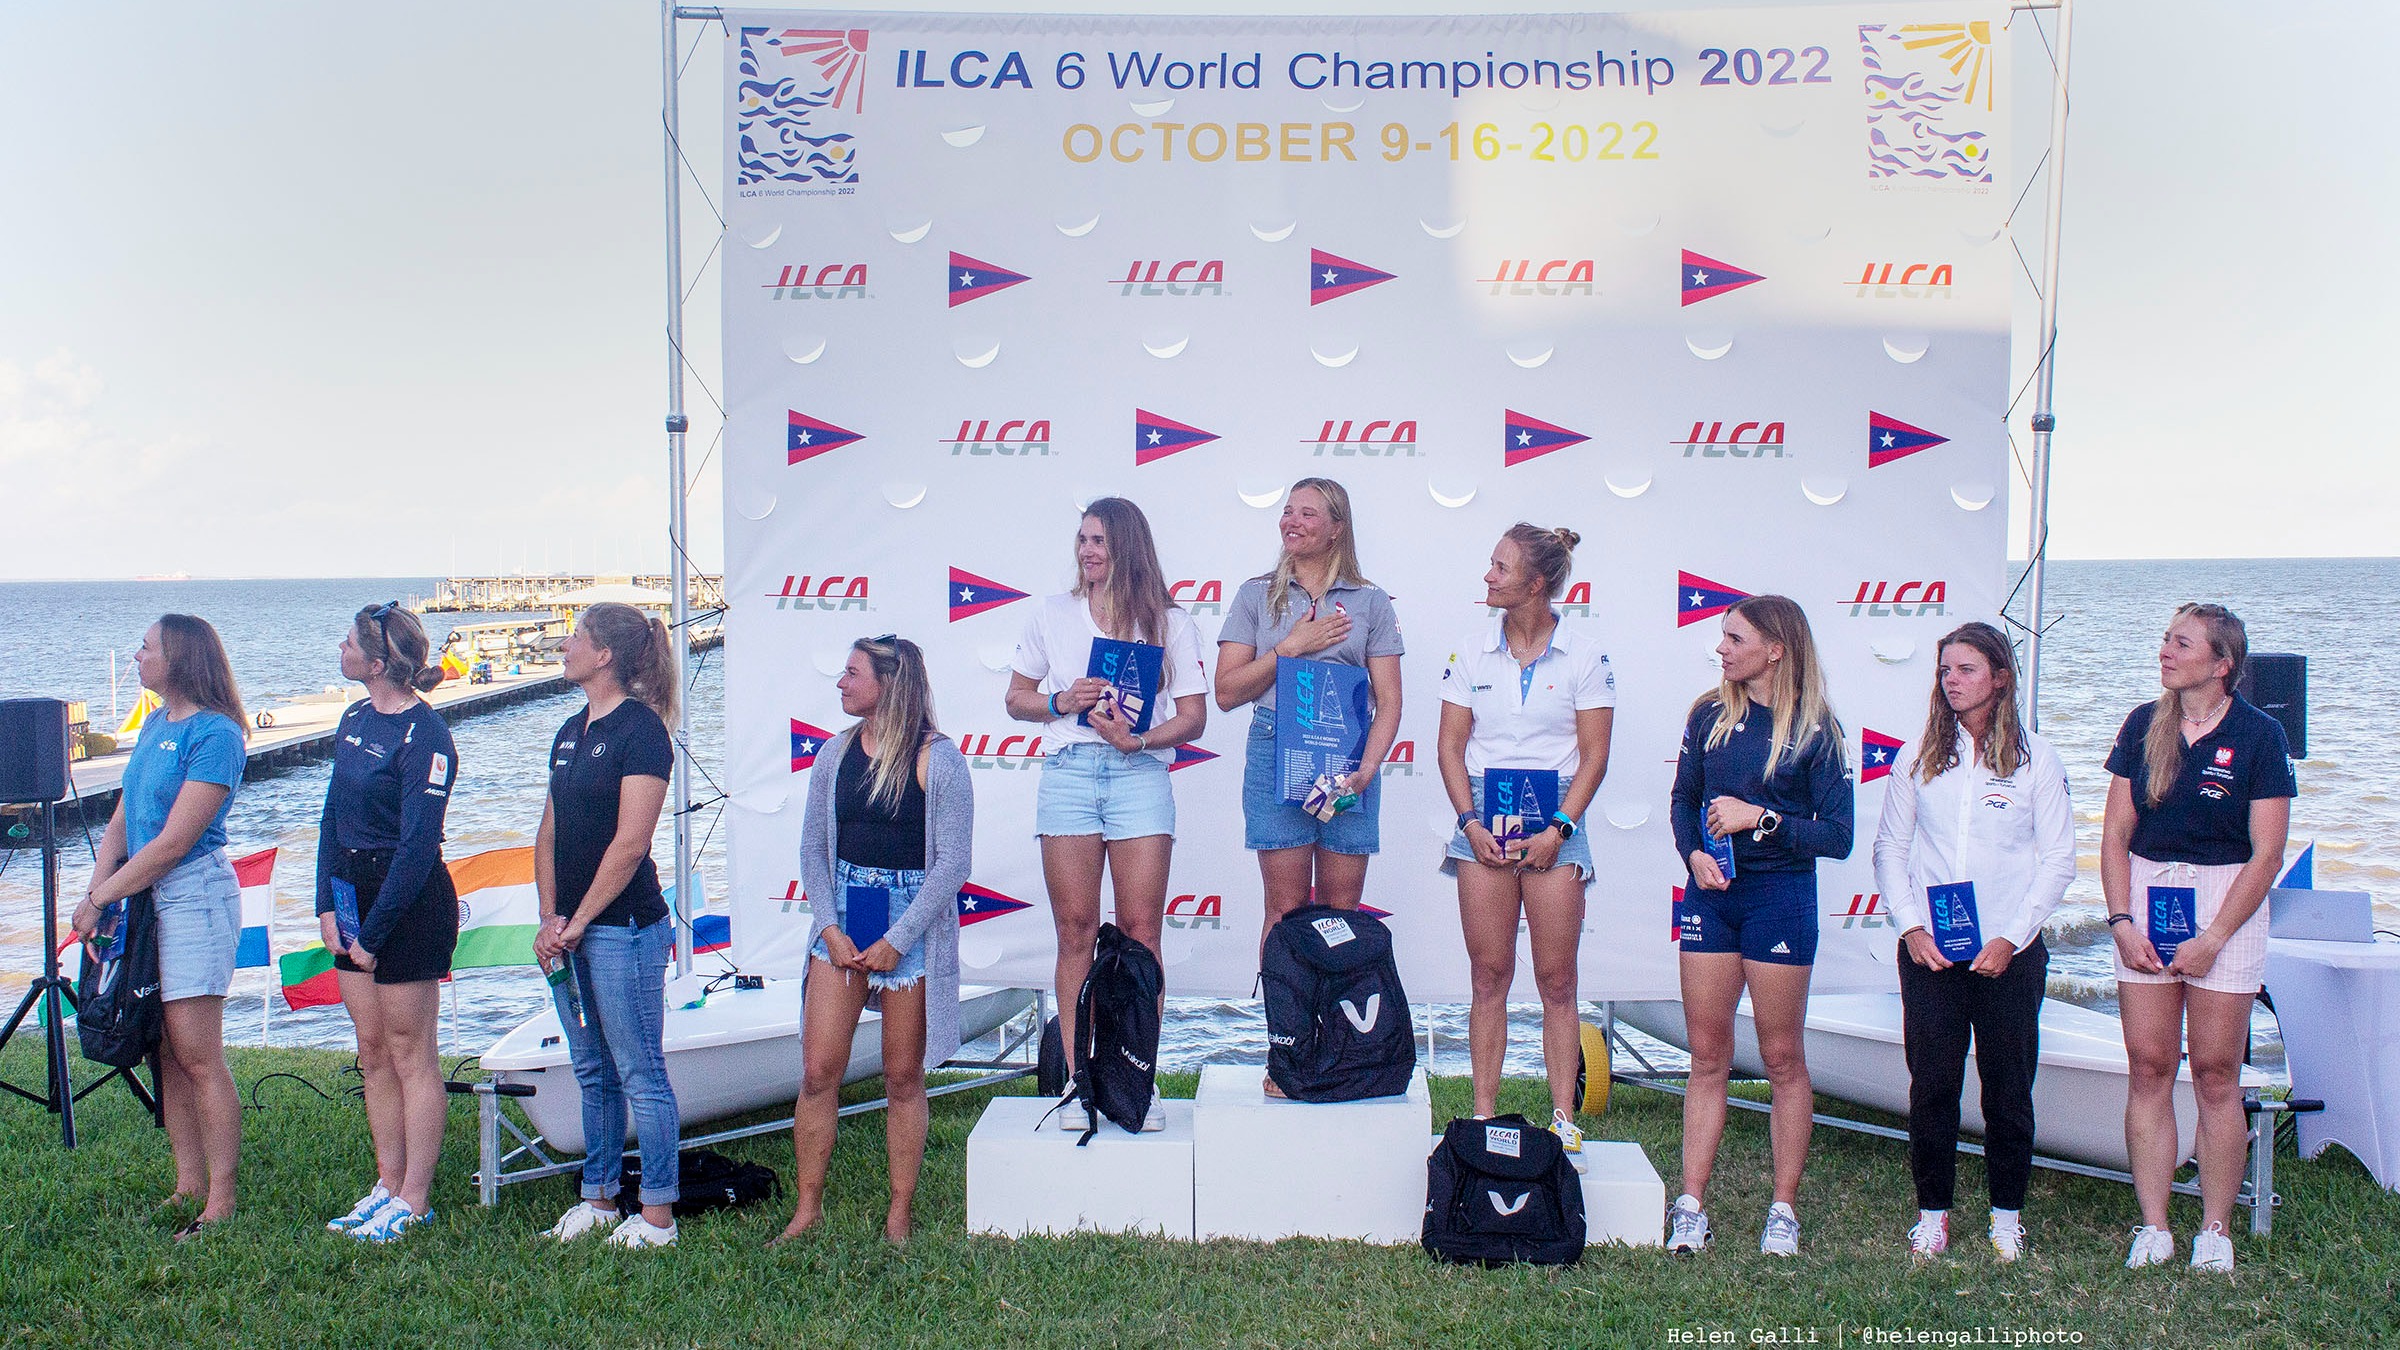 Season 3 // Denmark SailGP Team // Anne-Marie Rindom wins 2022 ILCA 6 Women's World Championship